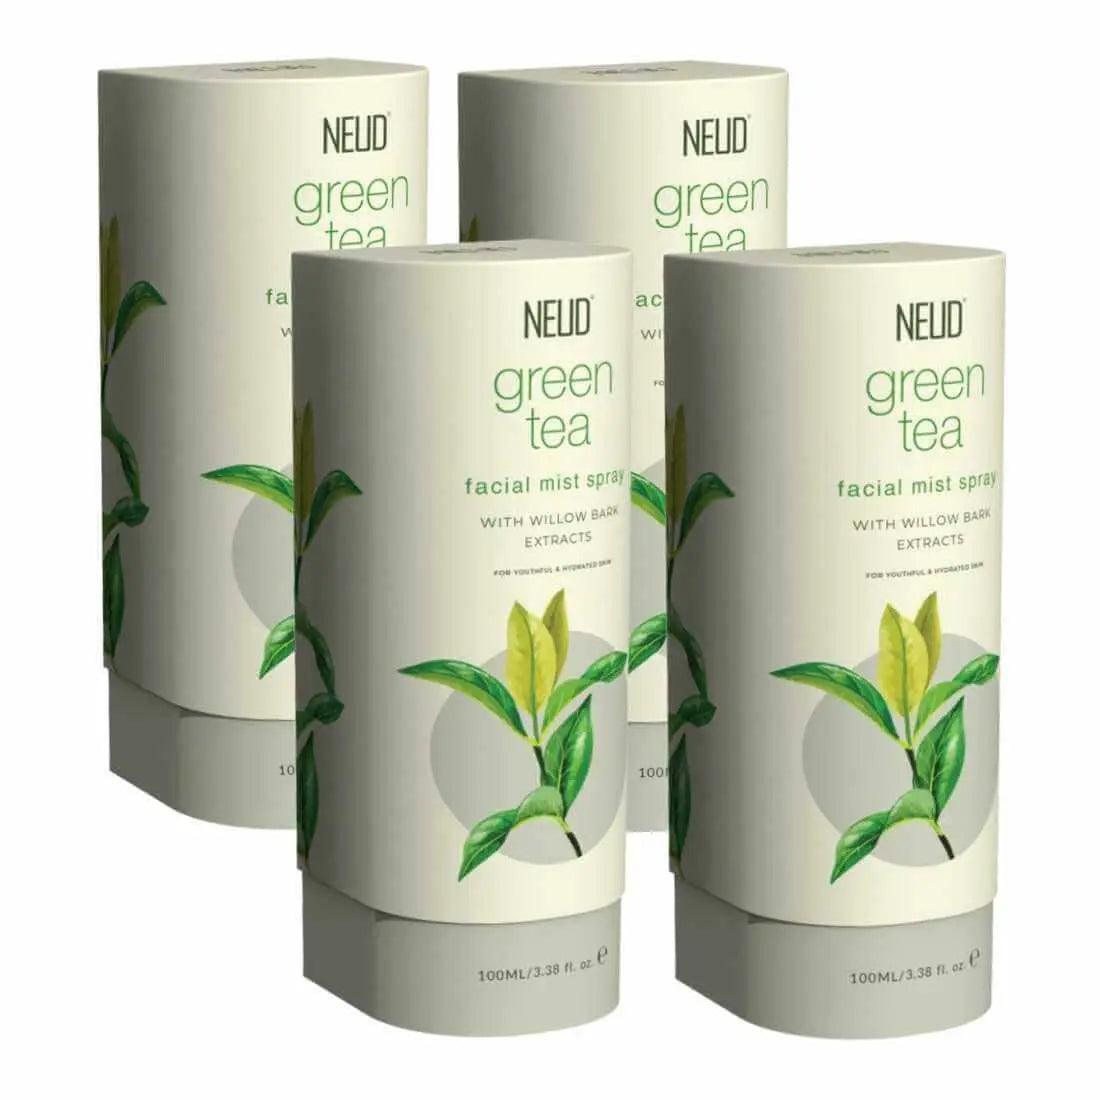 NEUD Green Tea Facial Mist Spray For Youthful & Hydrated Skin - 100 ml 9559682314024